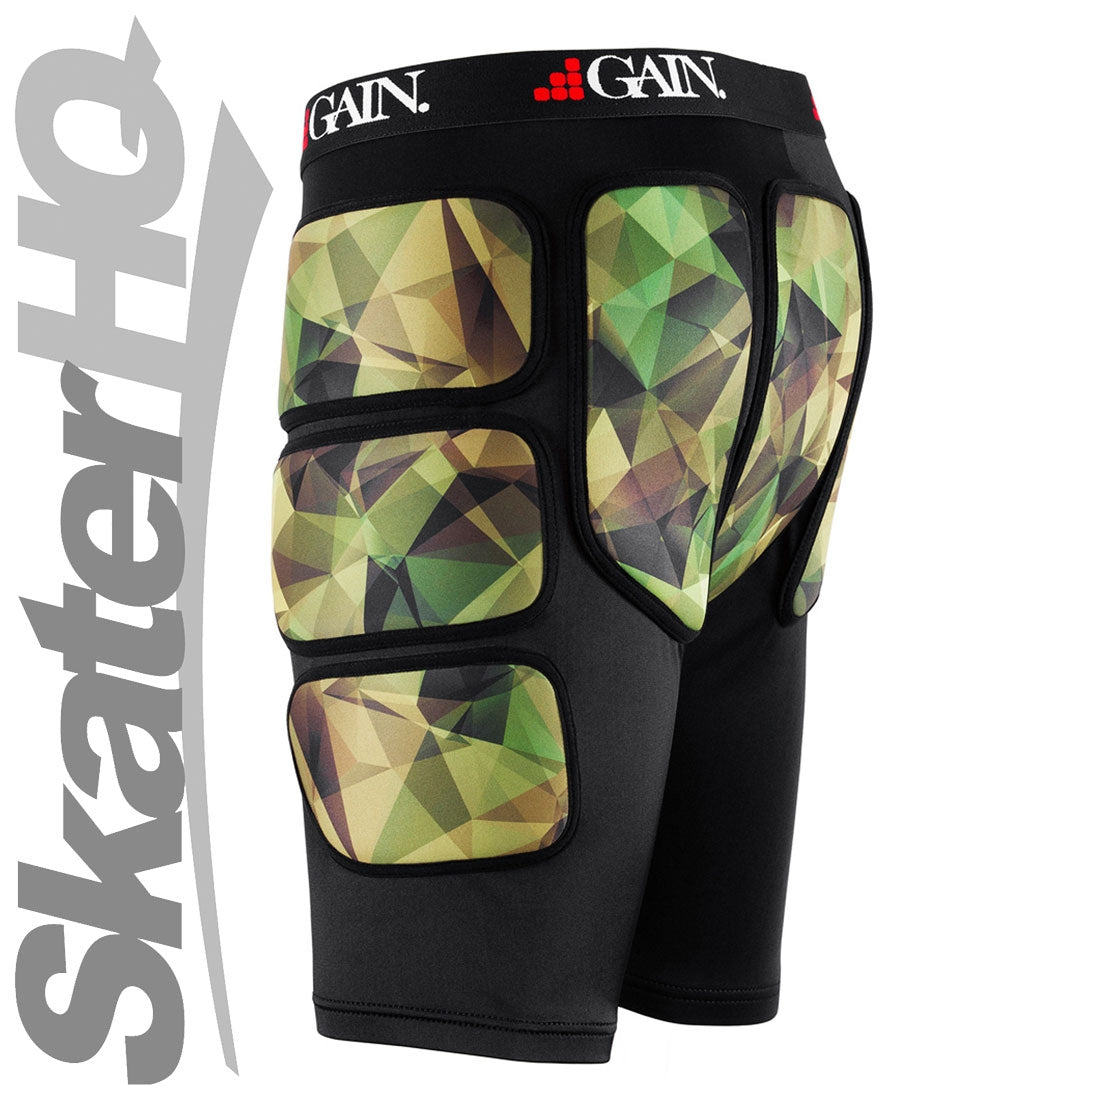 GAIN Sleeper Hip/Bum Pads - Camo - L Protective Gear